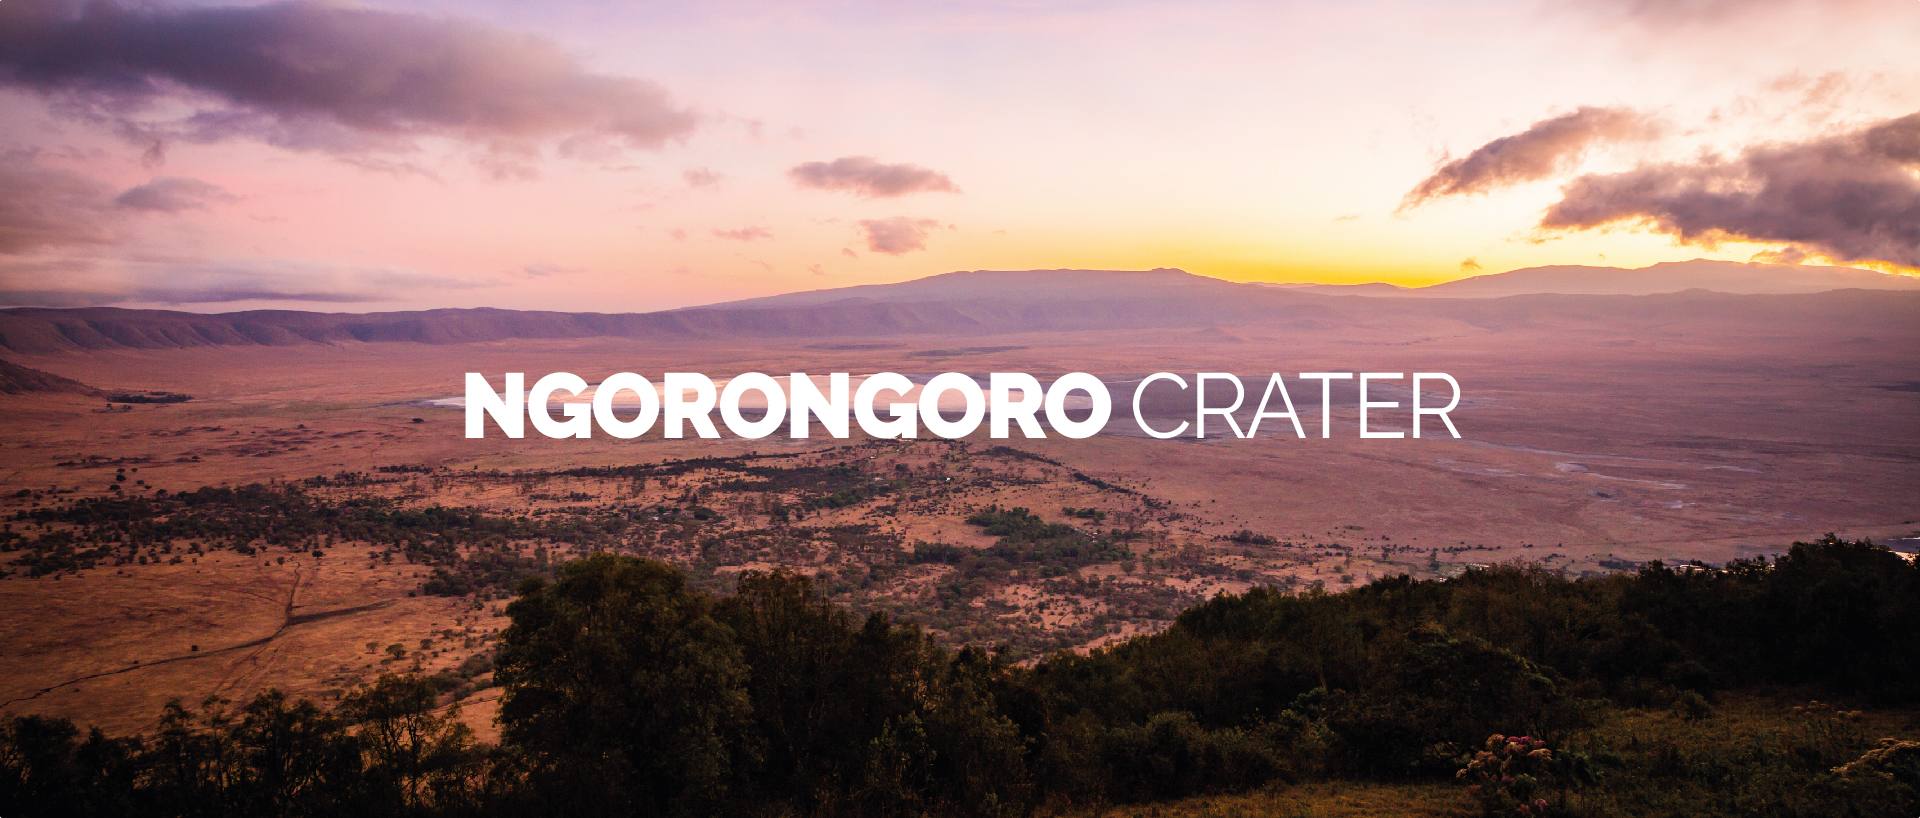 NGORONGORO CRATER